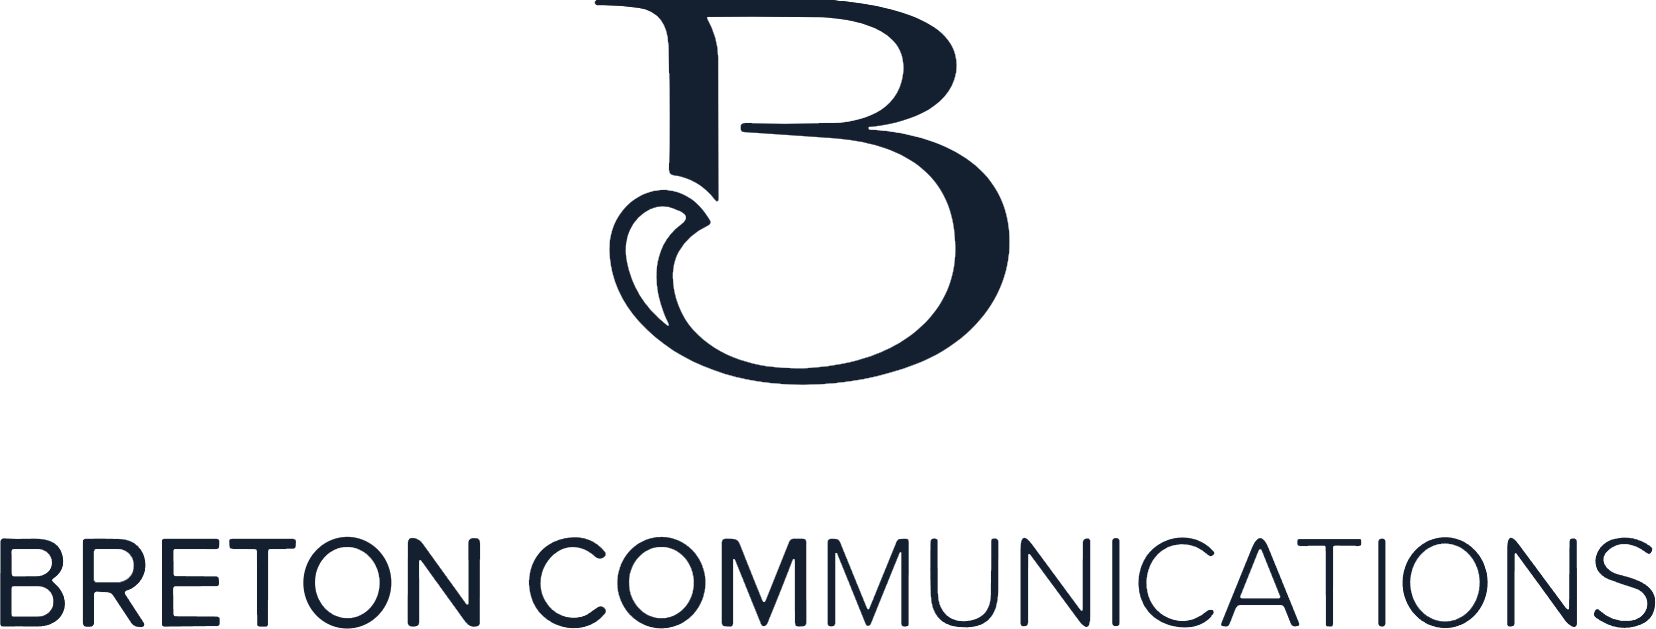 Breton Communications Light Logo